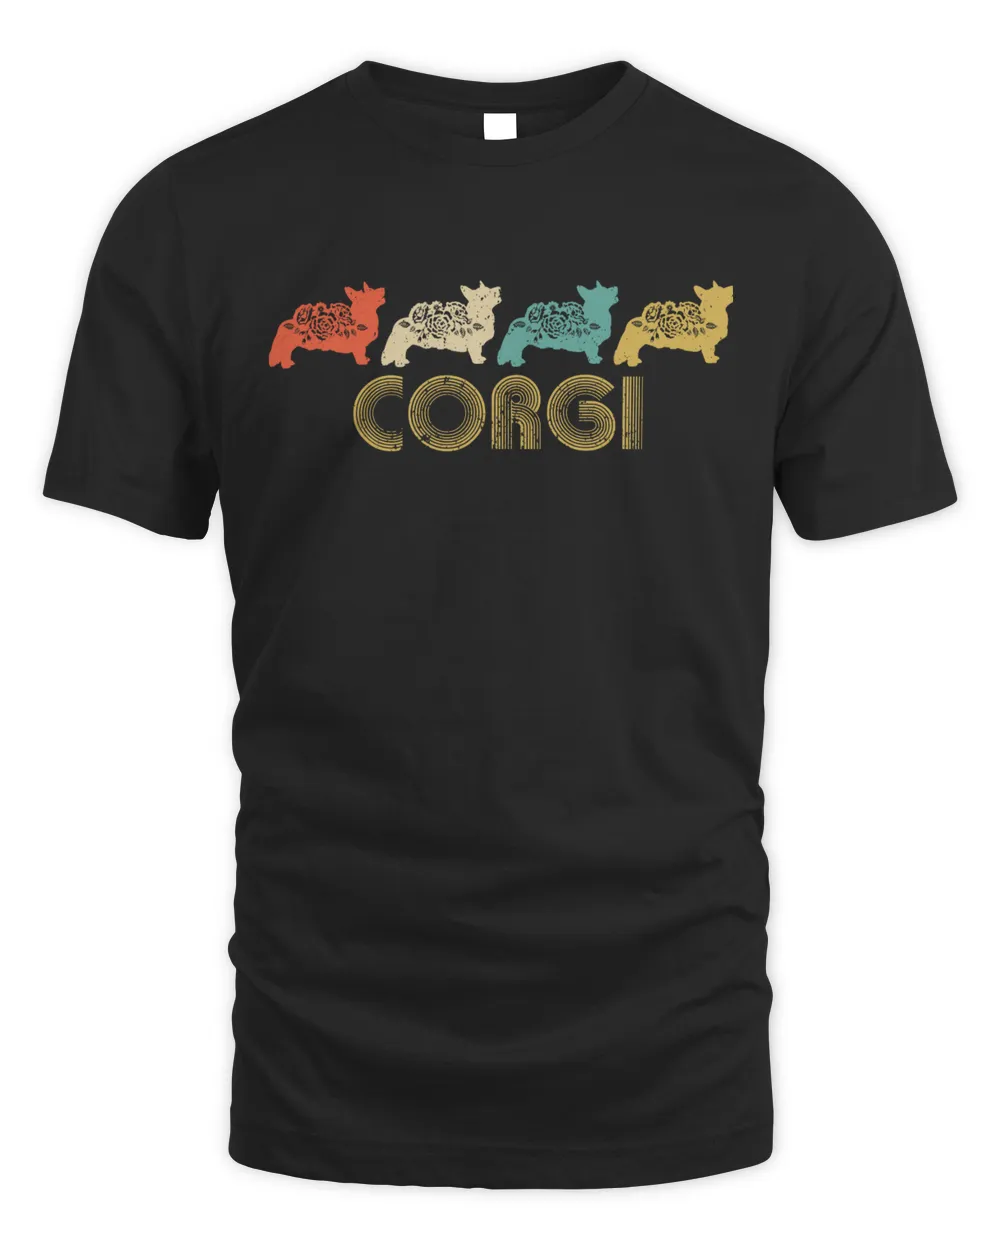 Cardigan Welsh Corgi Vintage classic